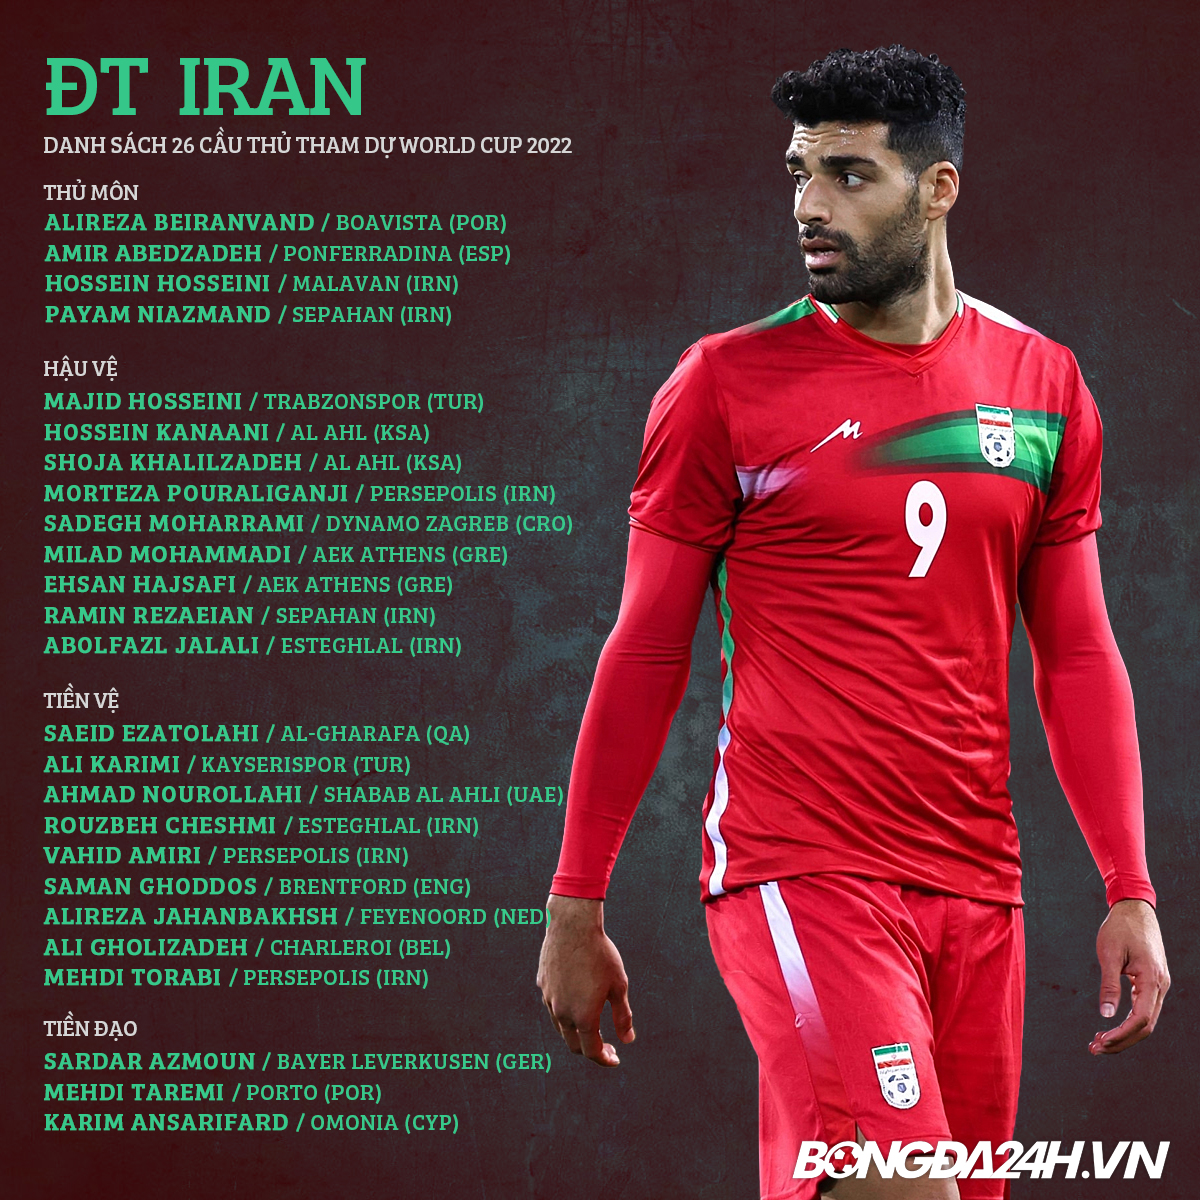 Danh sach dT Iran du World Cup 2022